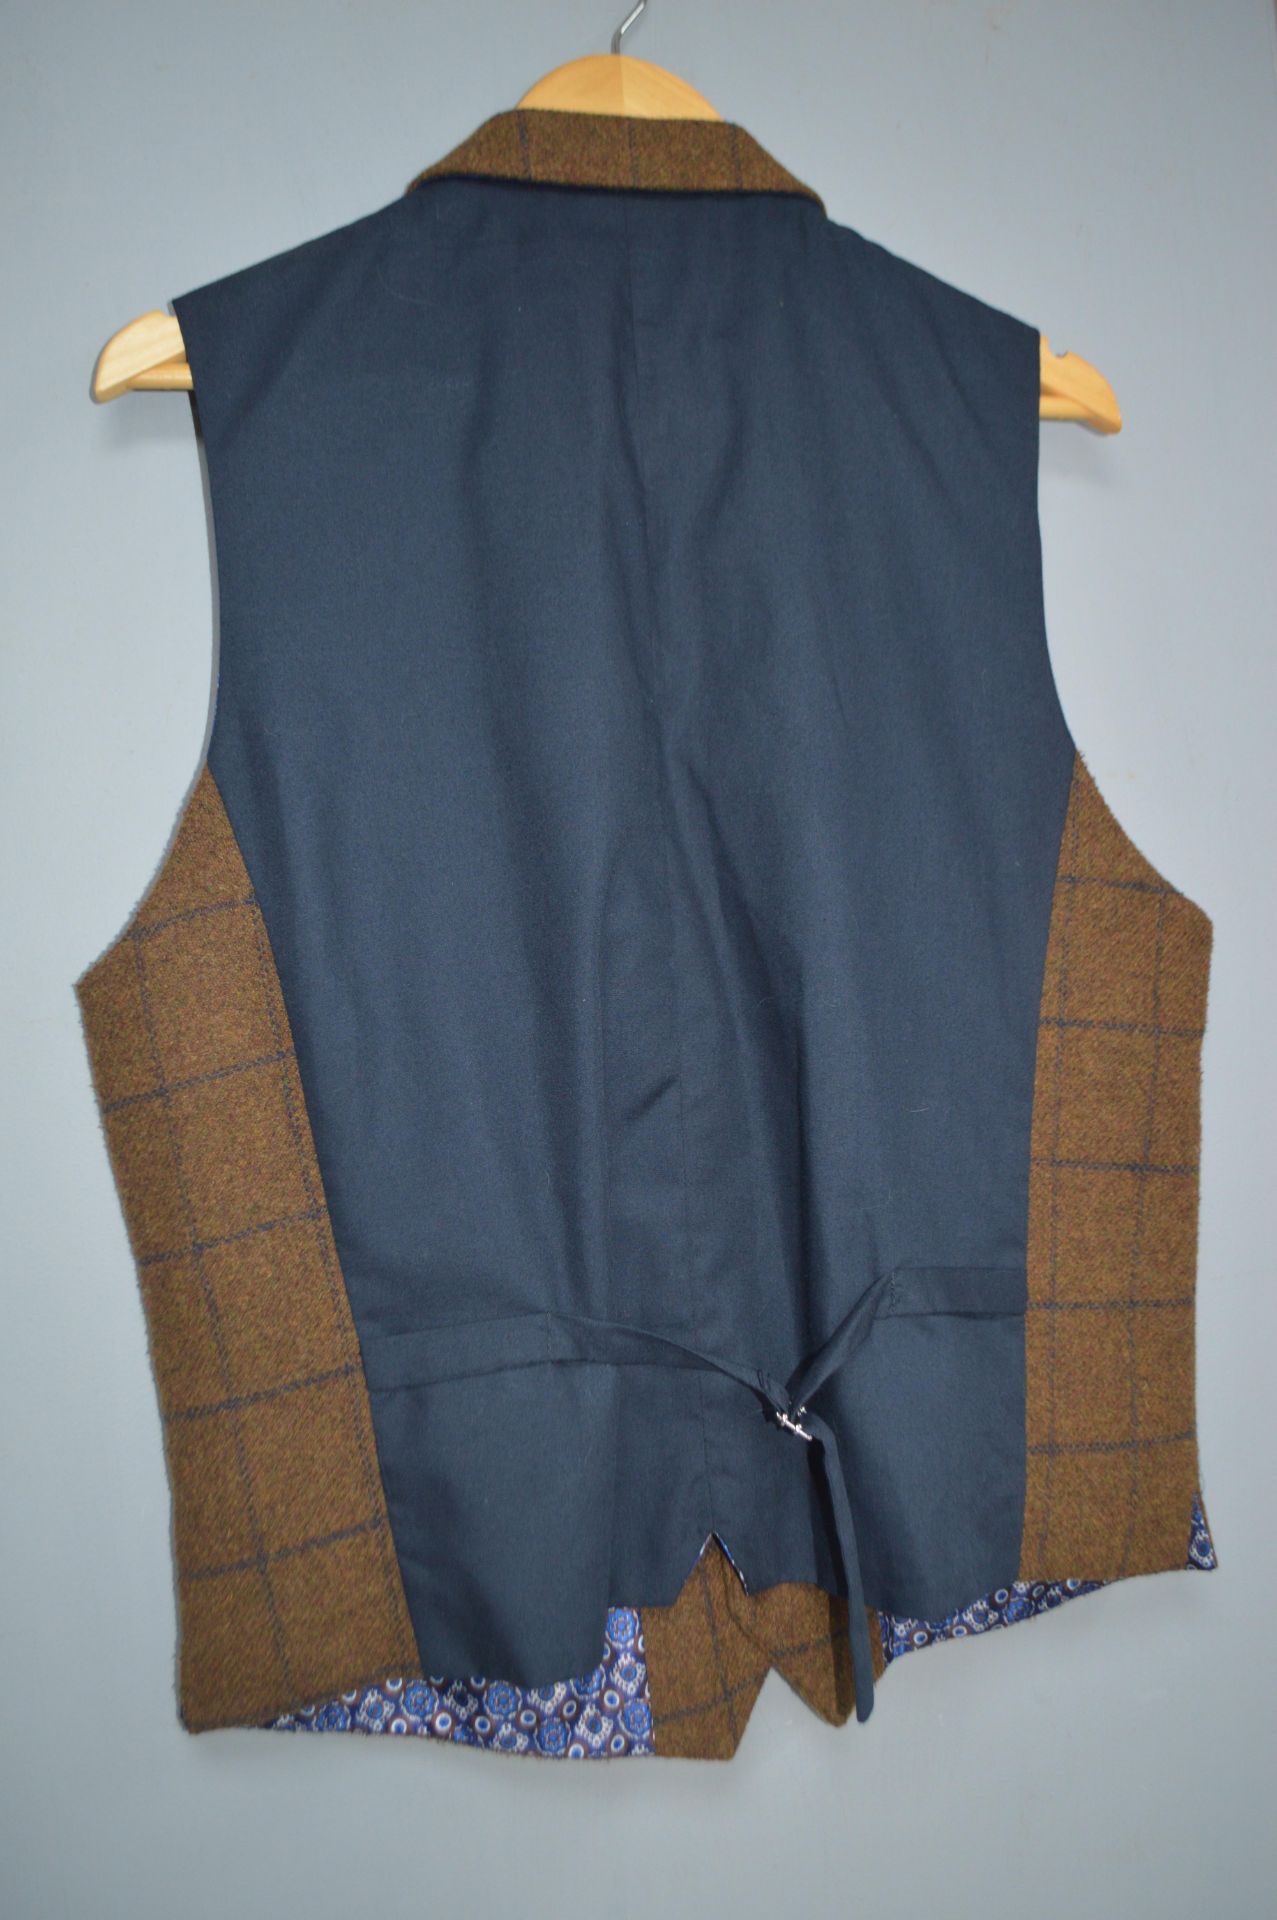 Cavani Gent's Tweed Waistcoat Size: 42" Chest - Image 2 of 2